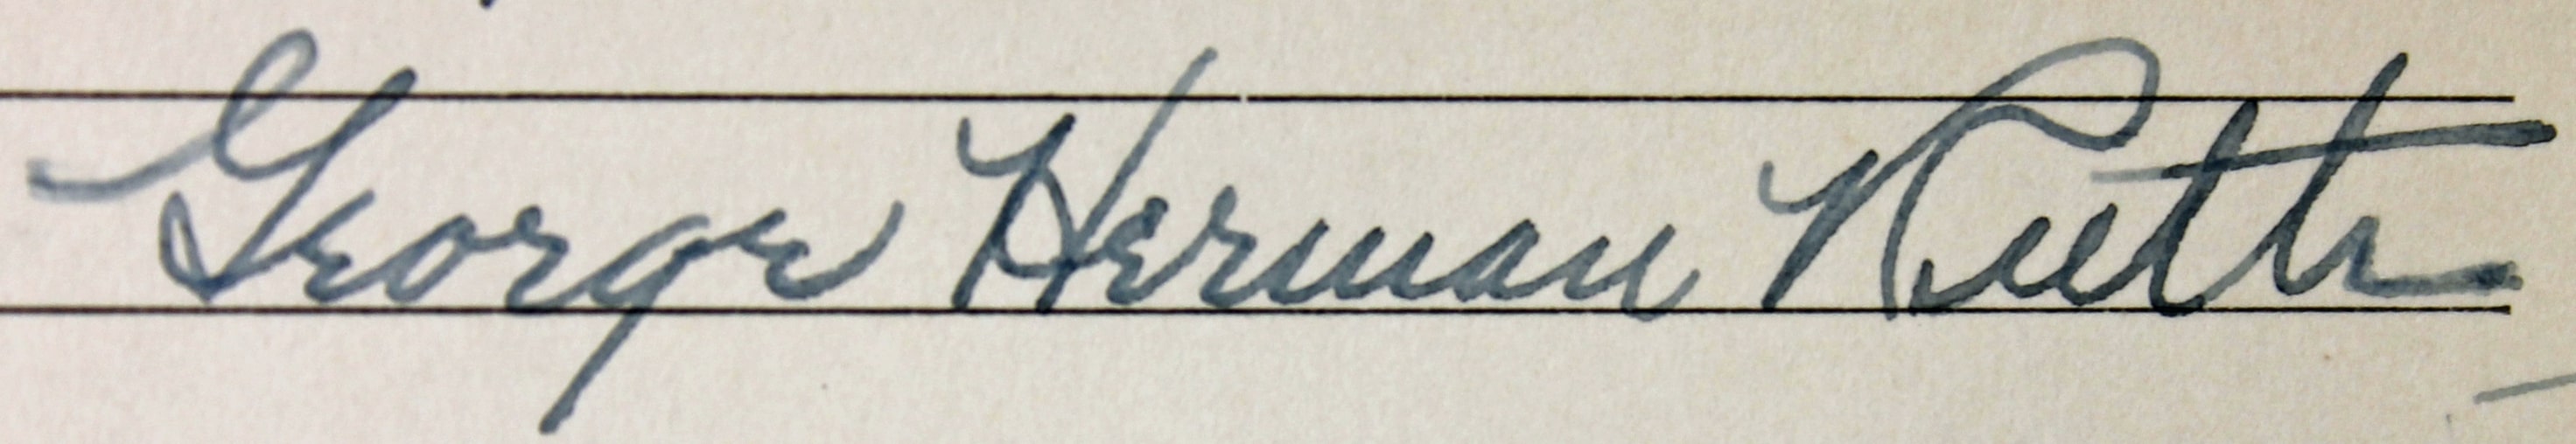 George Herman Ruth Autograph